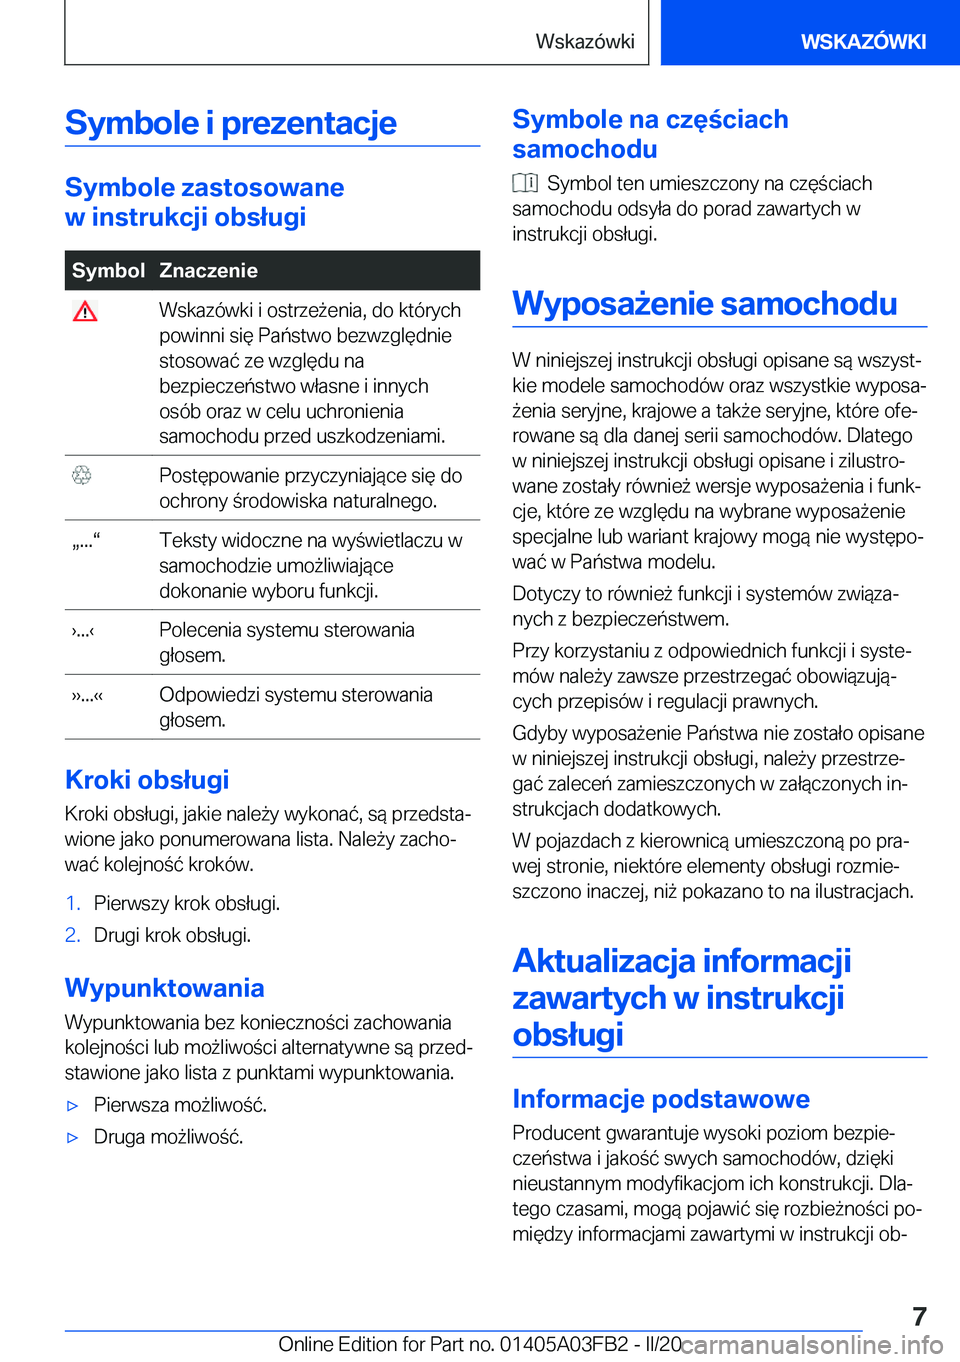 BMW 3 SERIES 2020  Instrukcja obsługi (in Polish) �S�y�m�b�o�l�e��i��p�r�e�z�e�n�t�a�c�j�e
�S�y�m�b�o�l�e��z�a�s�t�o�s�o�w�a�n�e
�w��i�n�s�t�r�u�k�c�j�i��o�b�s�ł�u�g�i
�S�y�m�b�o�l�Z�n�a�c�z�e�n�i�e��W�s�k�a�z�